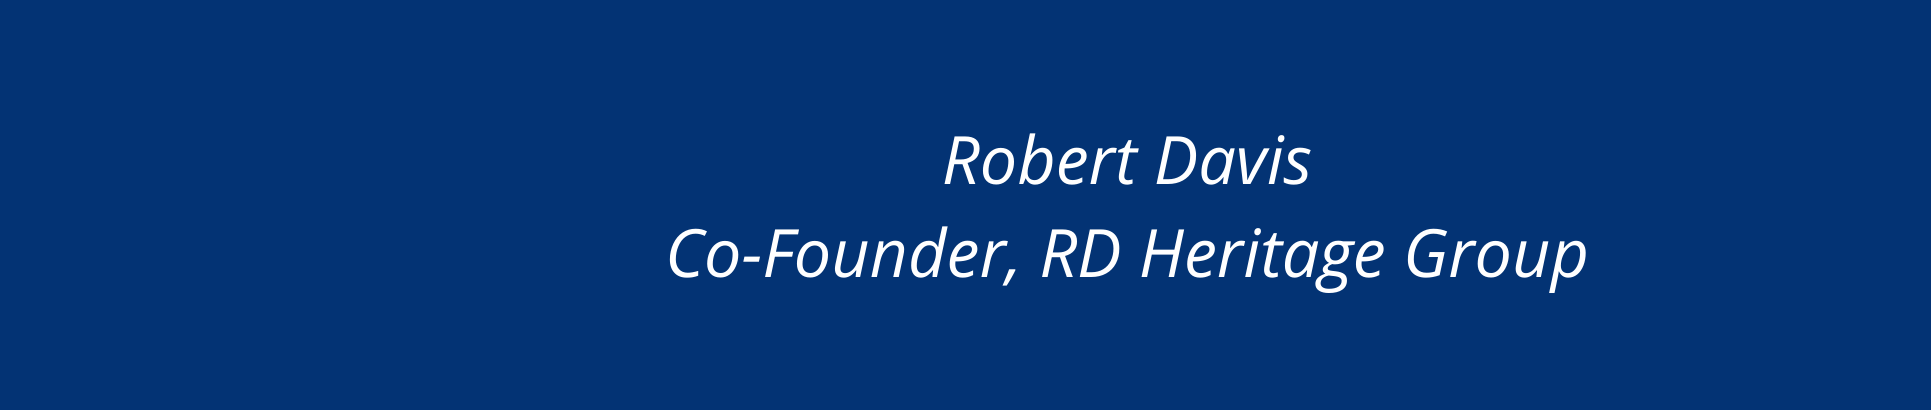 Robert Davis's profile banner